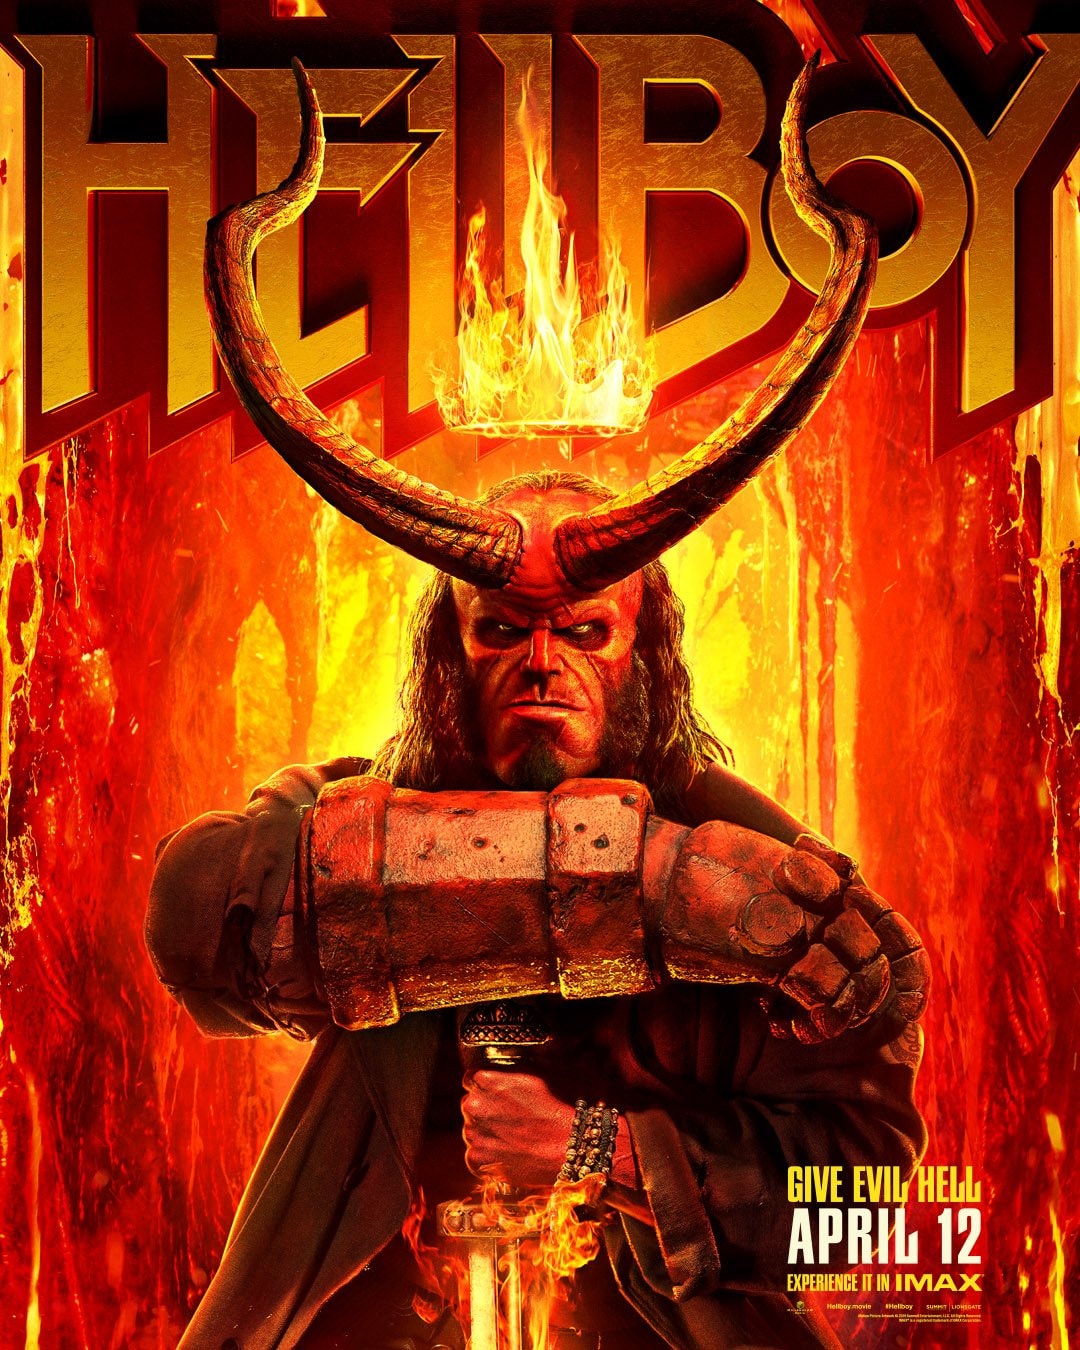 David Harbour's 'Hellboy' Gets a Second Trailer milla jocovich ian mcshane guillermo del toro lionsgate comic comicbook superhero red devil guy with huge arm 